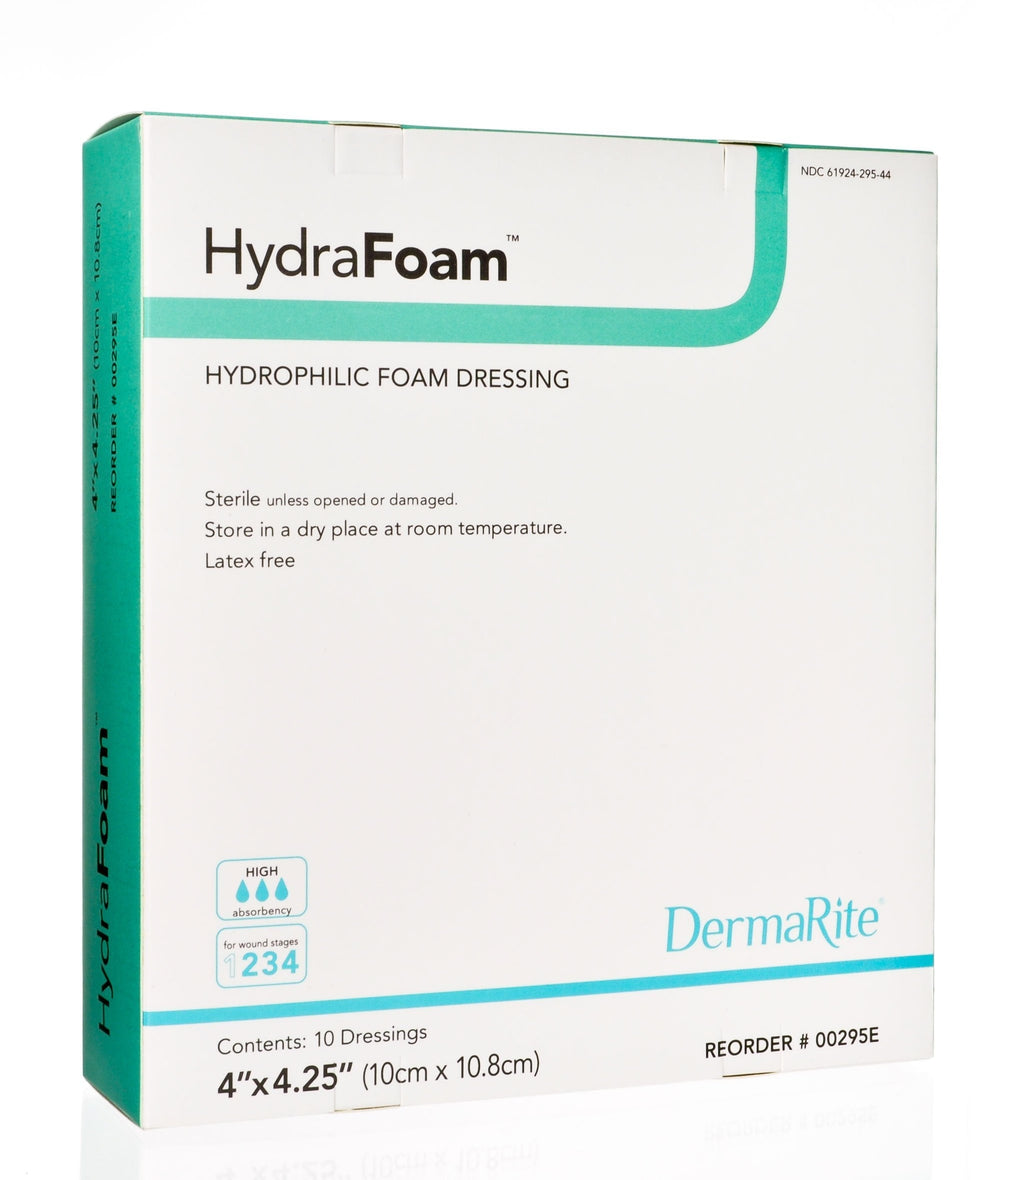 [Australia] - DermaRite Hydra Foam Hydrophilic Foam Dressing 4" x 4.25" 